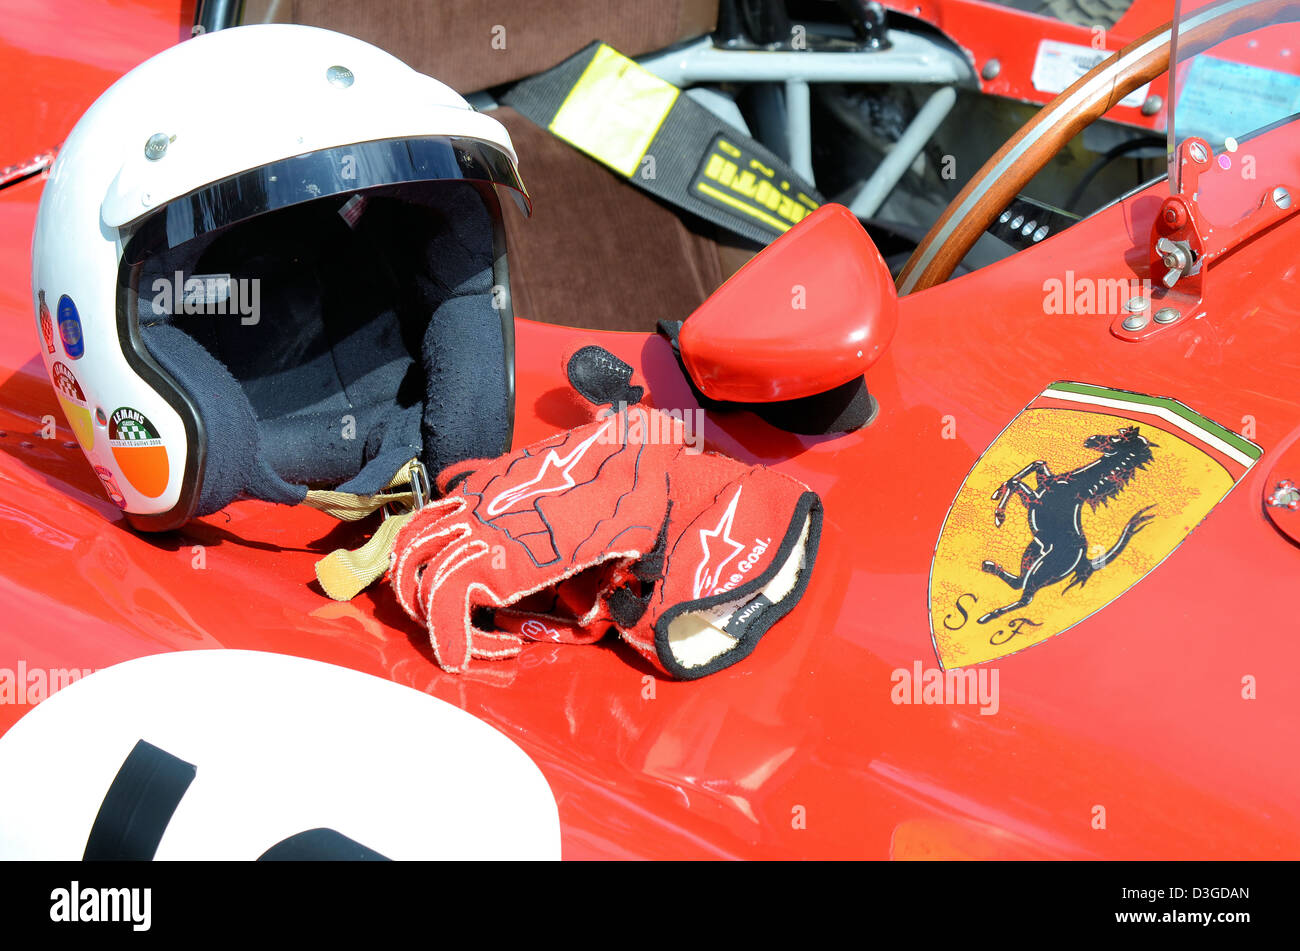 Ferrari Sport Racing Helmet 